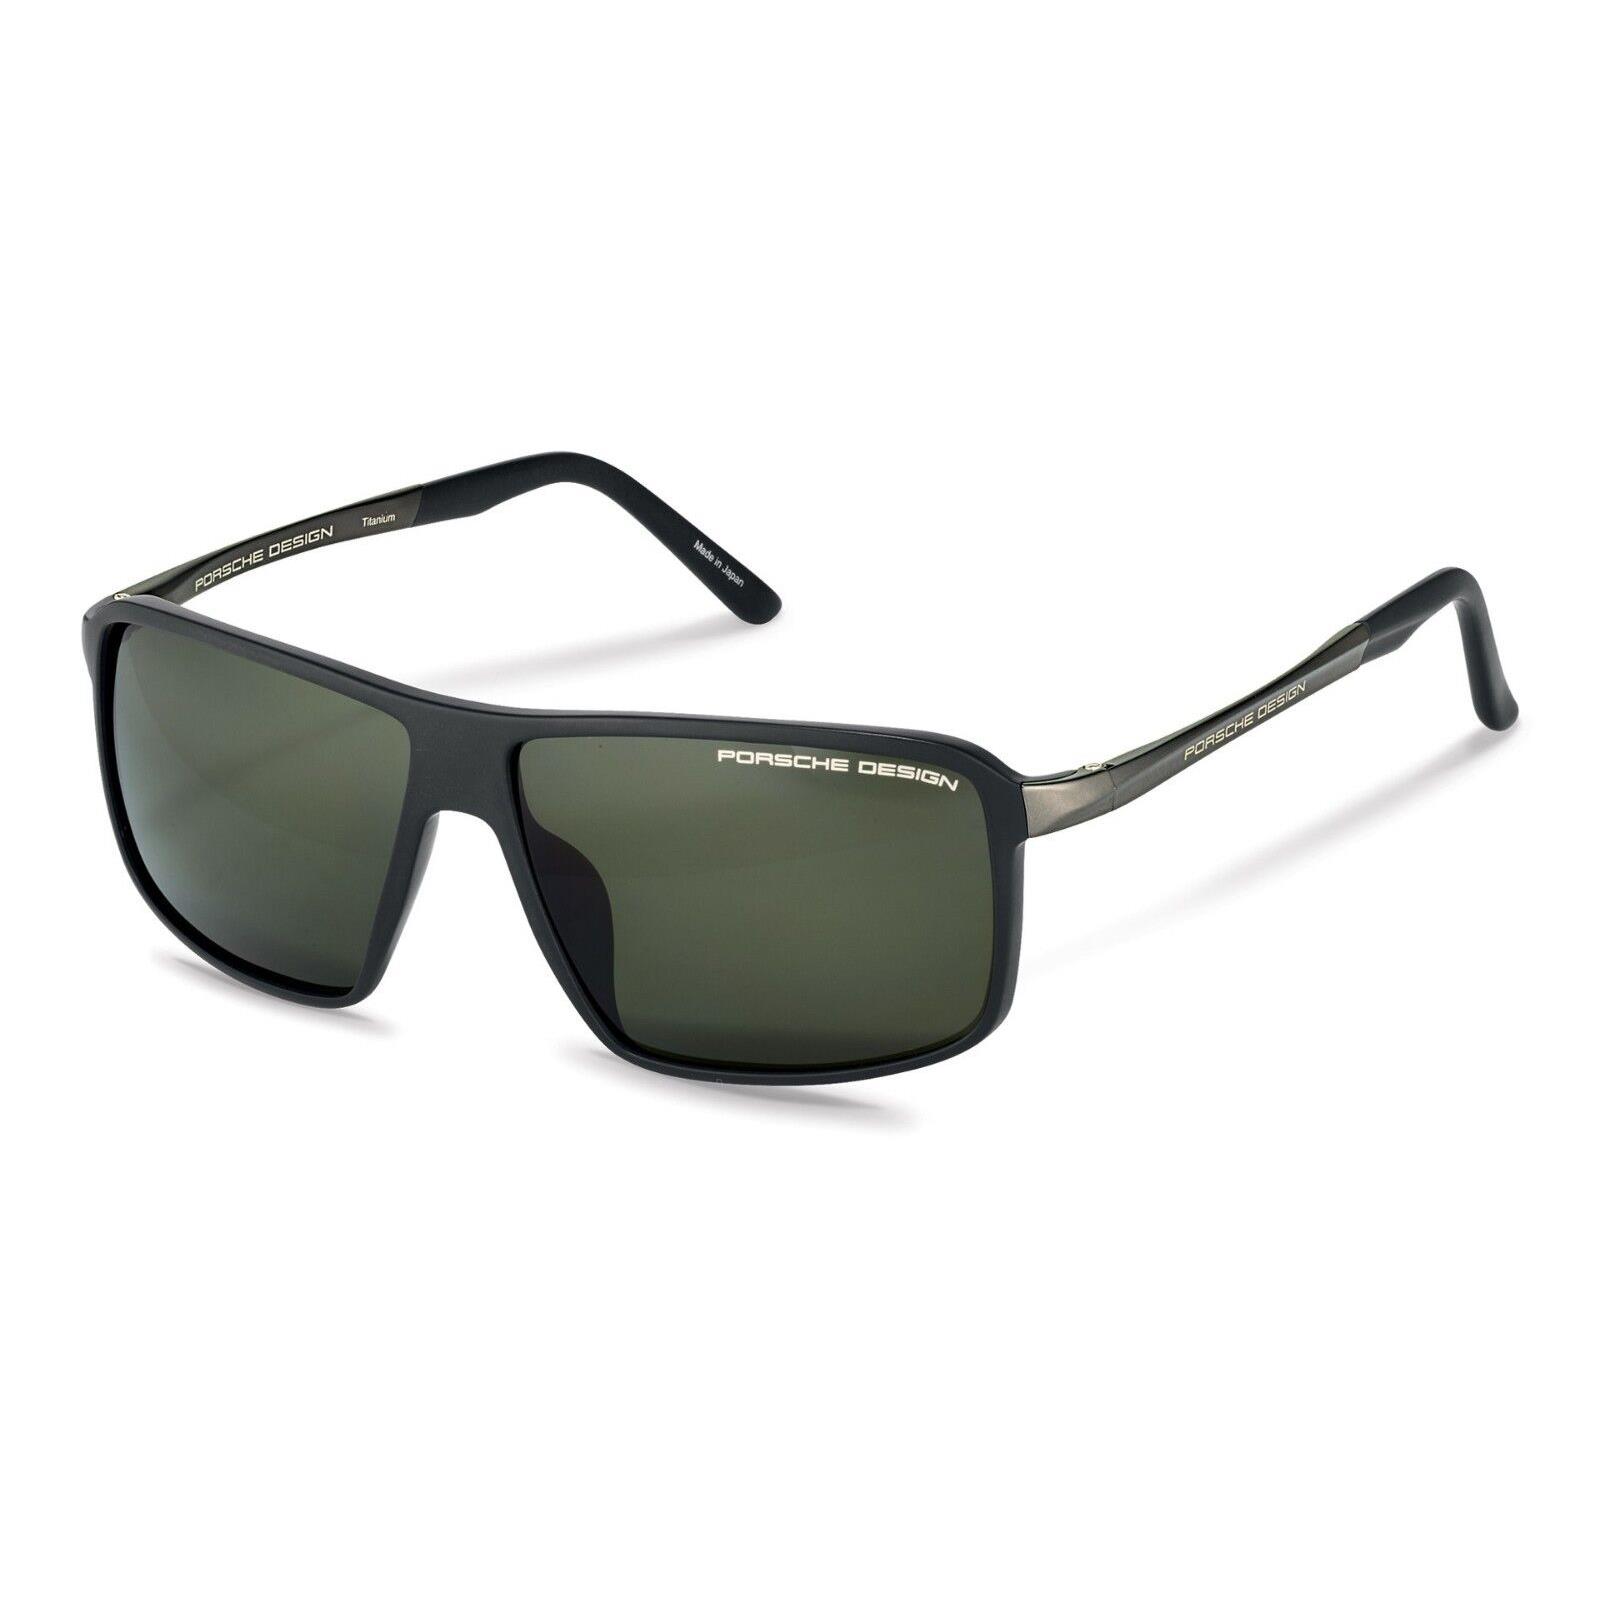 Porsche Design P 8650 A Black Sunglasses